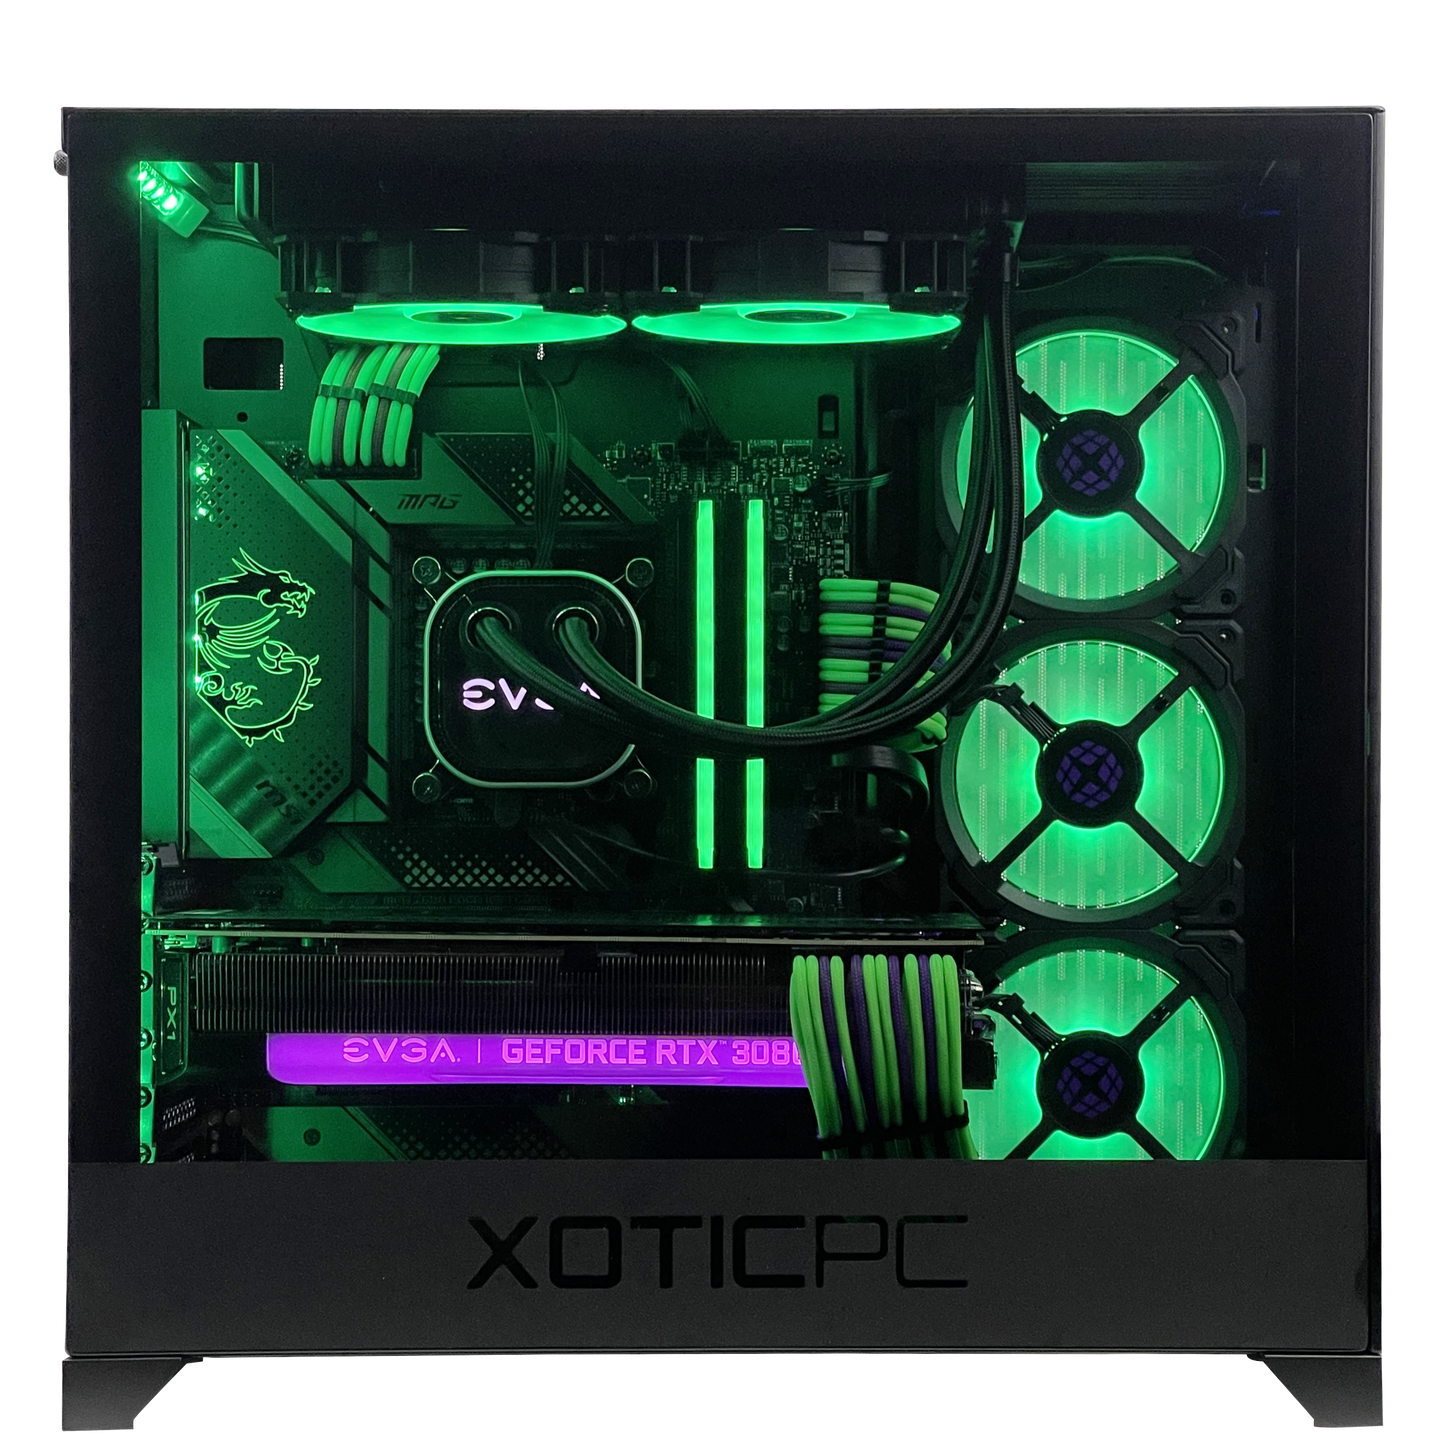 XOTIC PC GX11 DYNAMIC Gaming Desktop w/ INTEL Z790 & DDR5